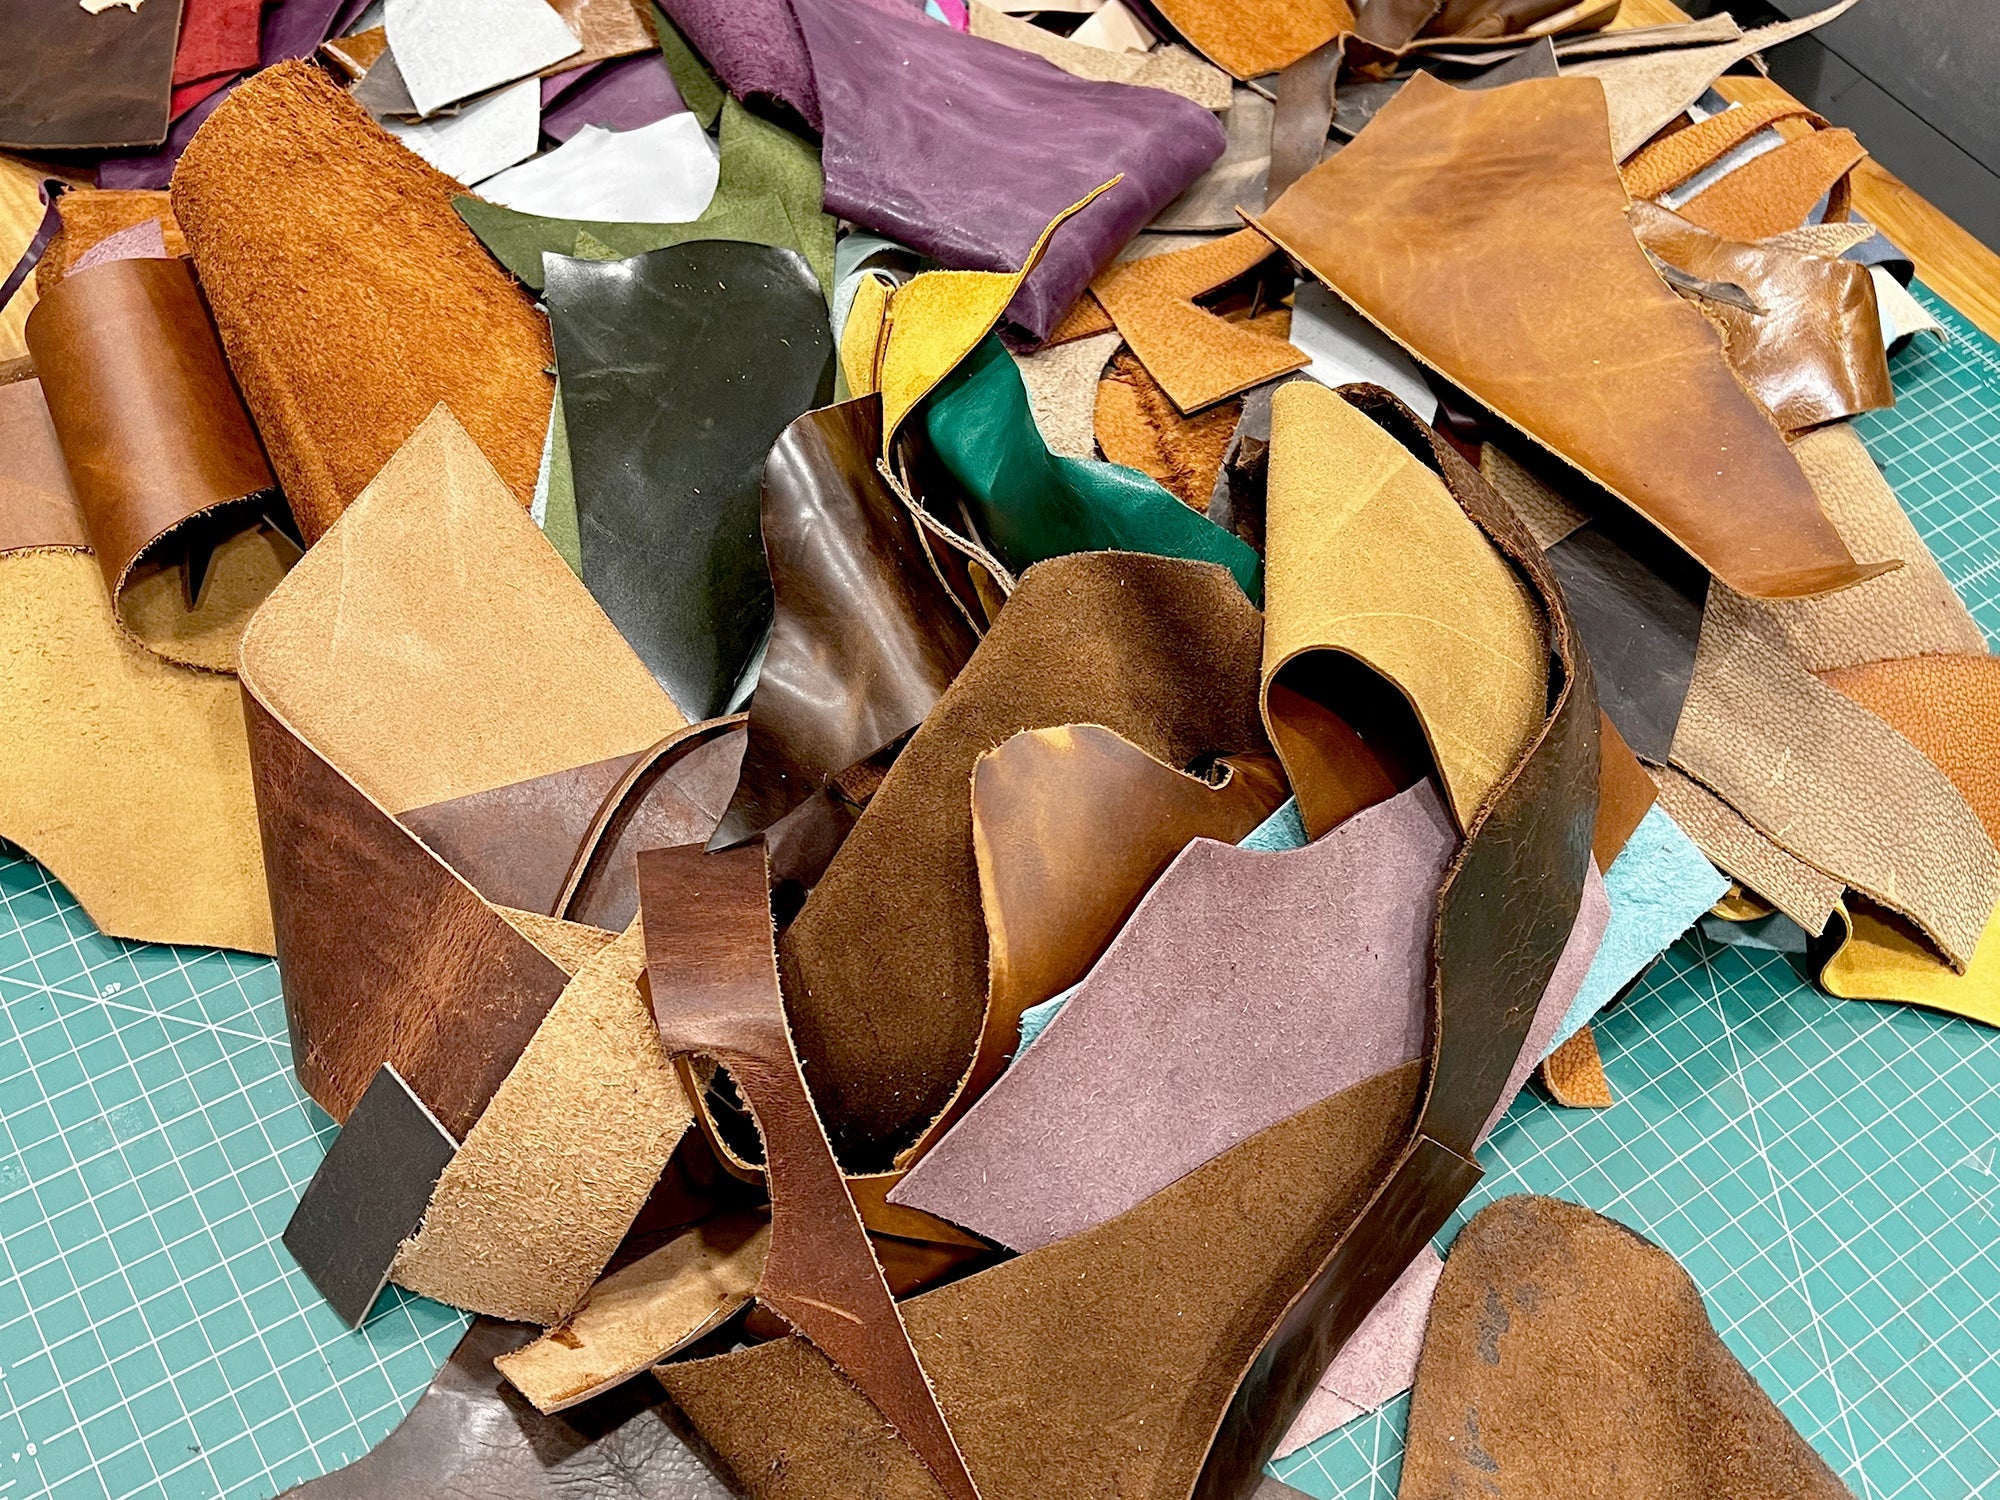 Elkskin leather scraps , Scrap leather , Craft leather scraps , 243